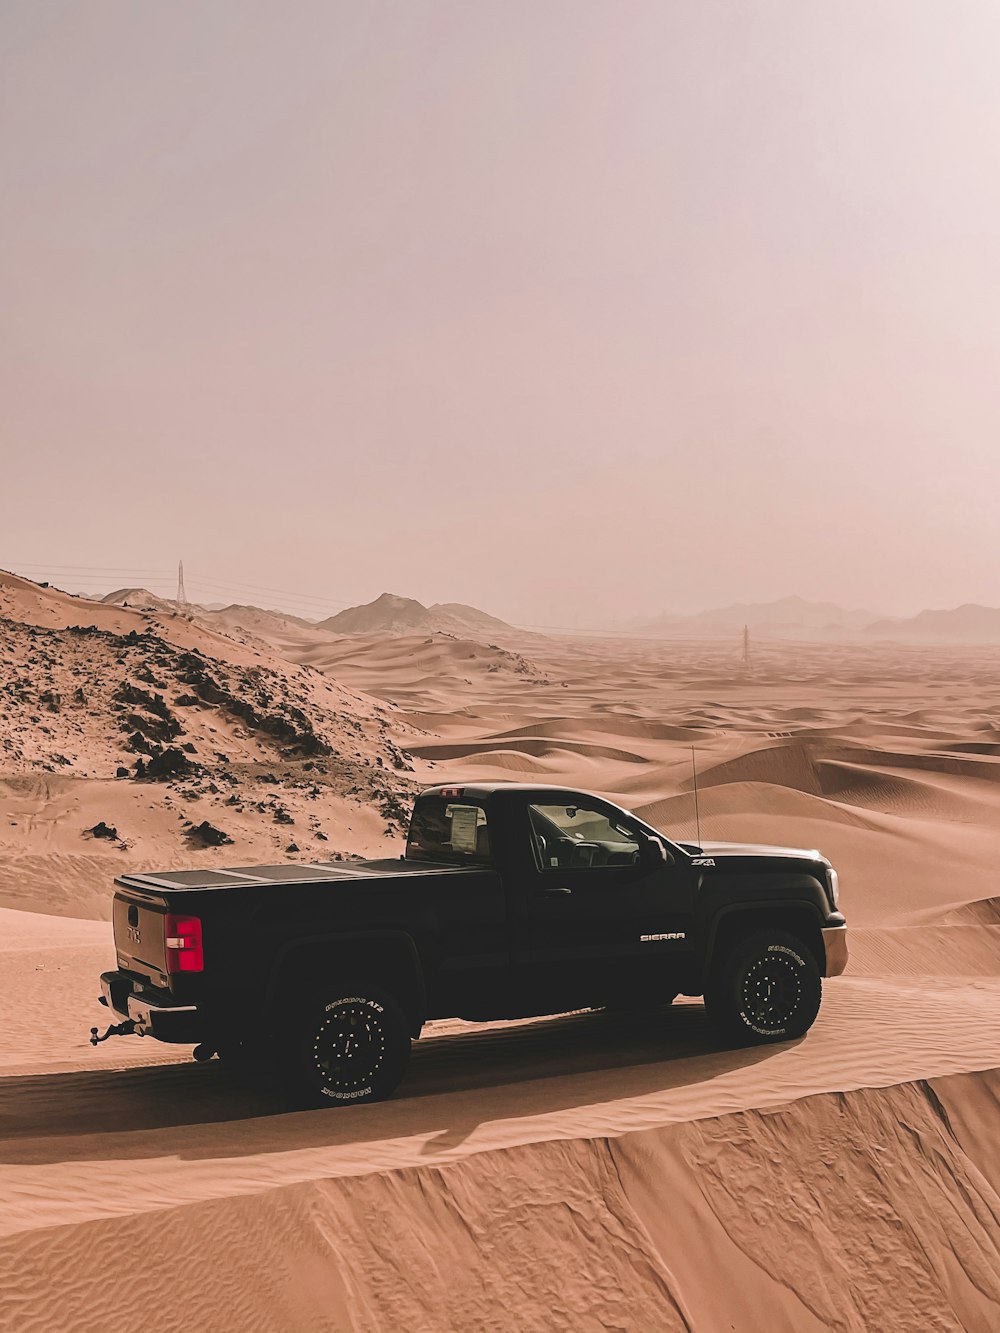 a black truck is driving through the desert